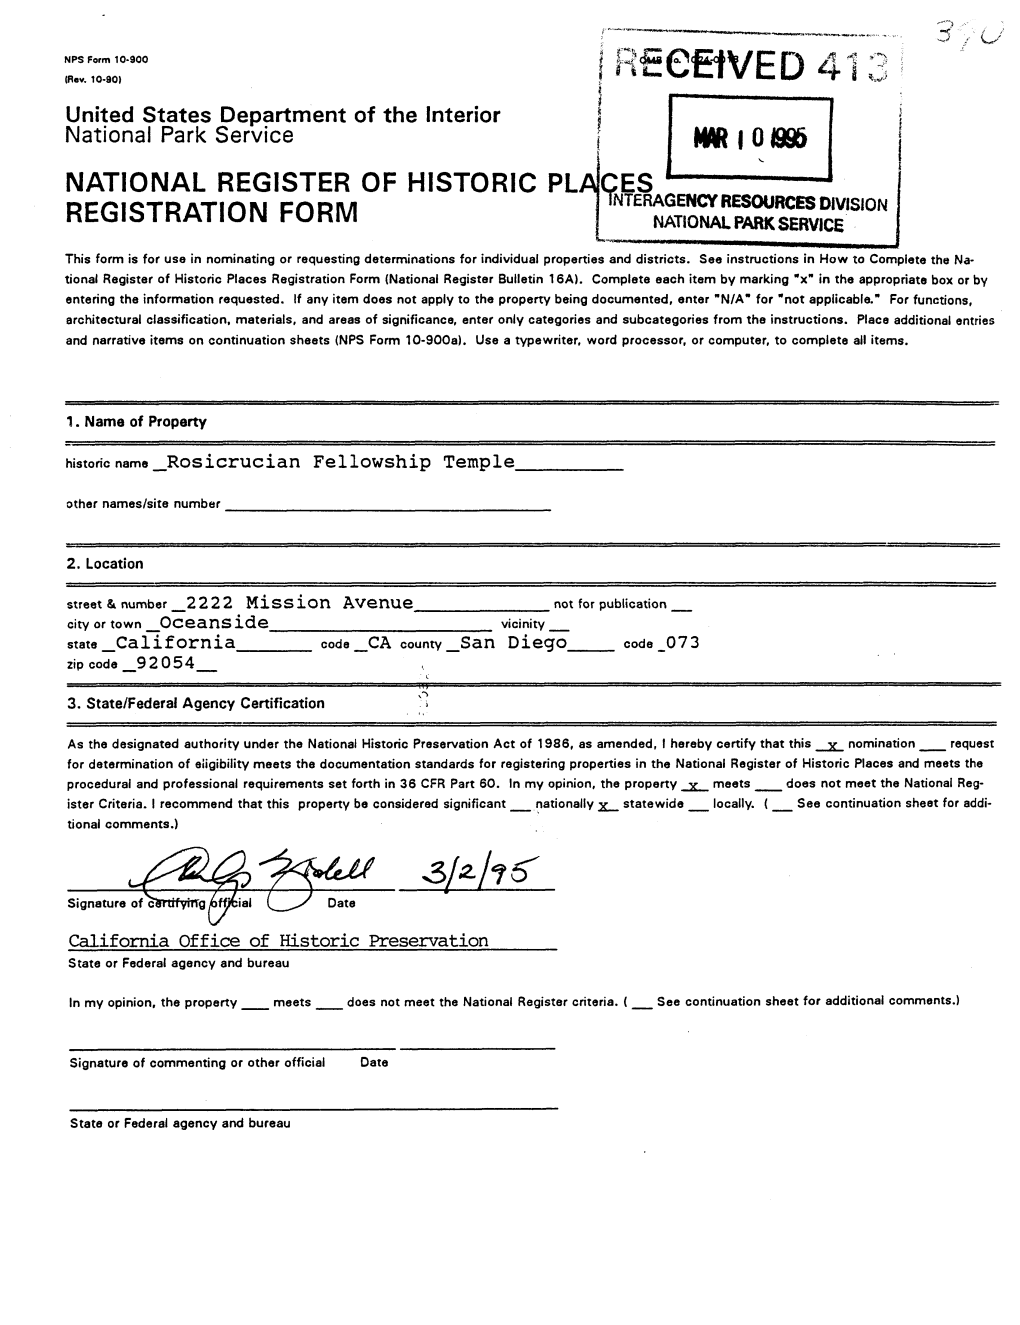 National Register of Historic Places Tnterac 5Ency Resources Division Registration Form ' Rnxwonal Park Service